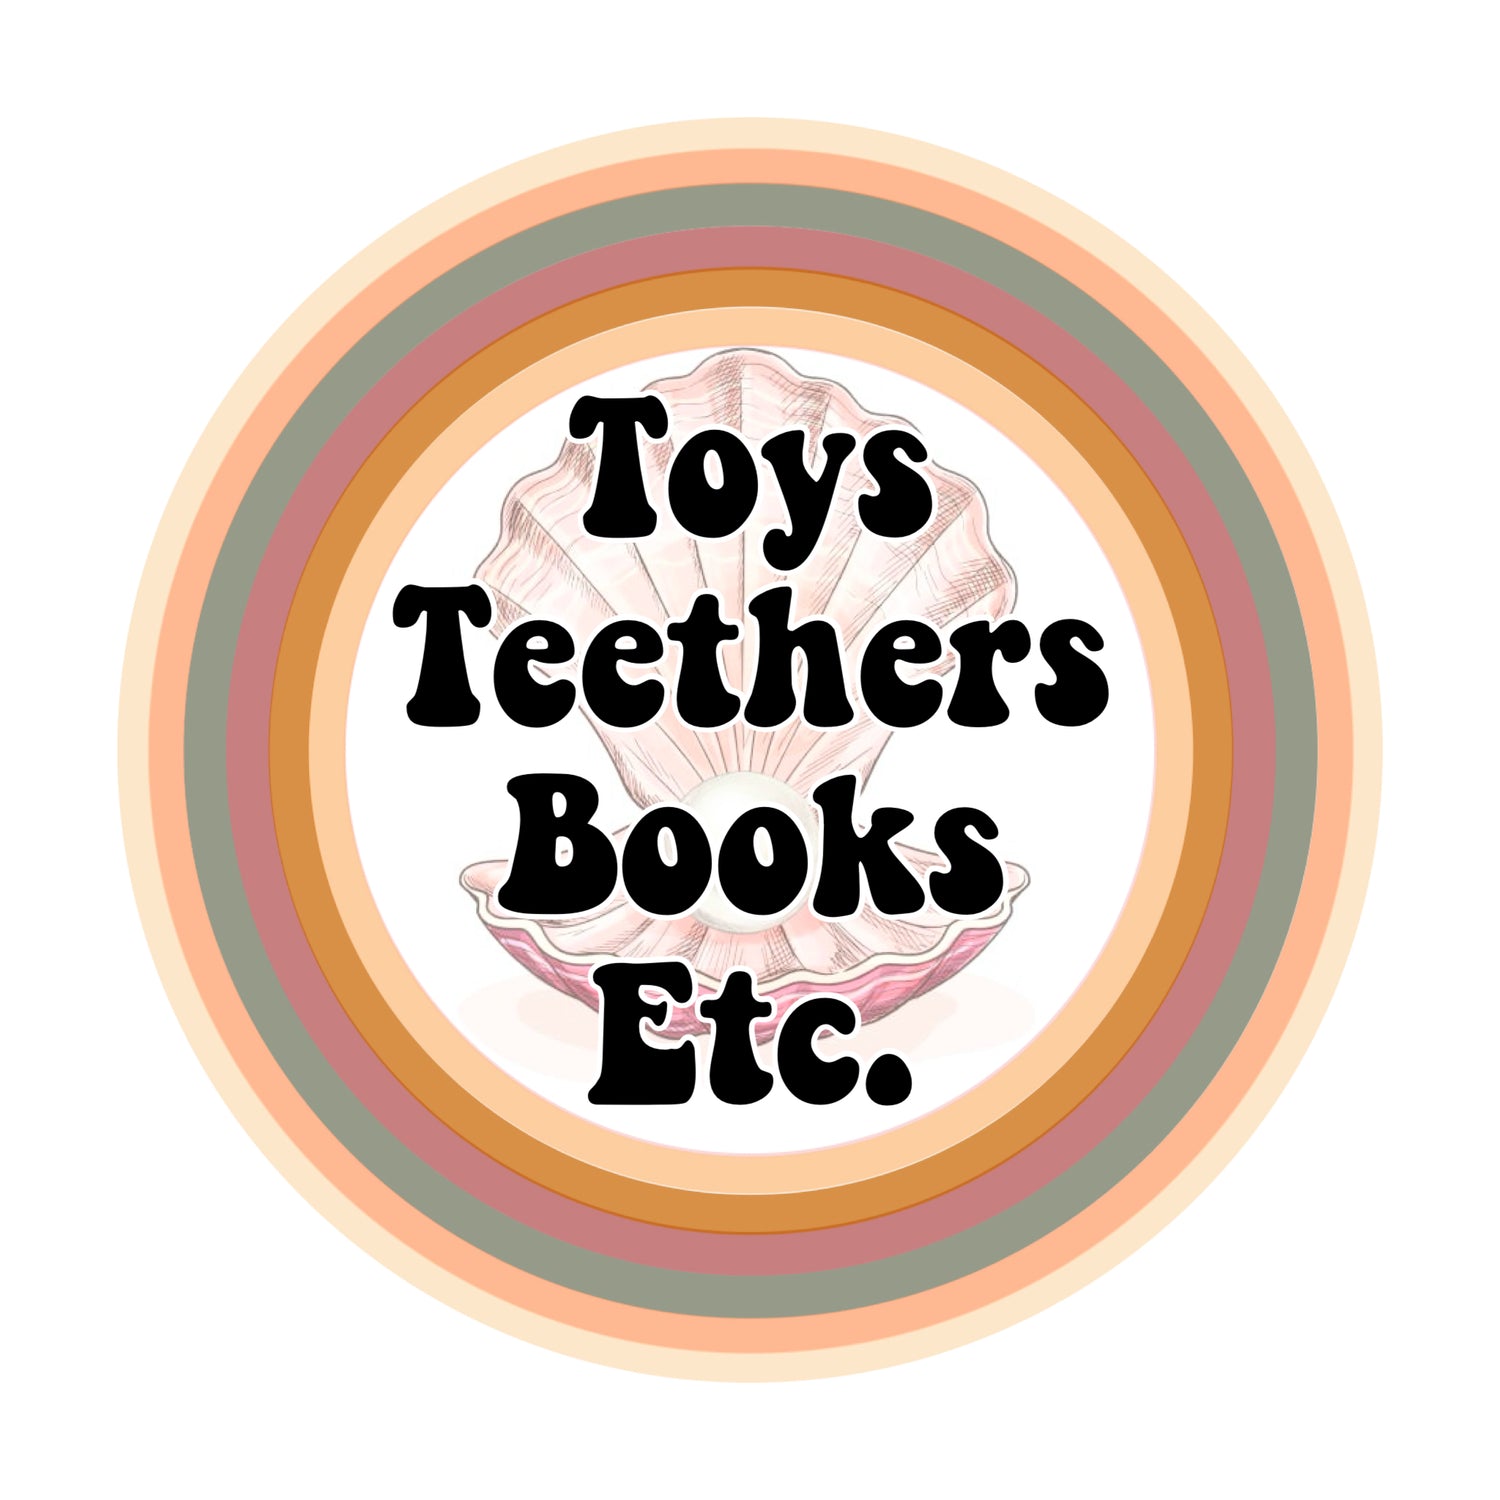 Toys + Teethers + Books, etc.